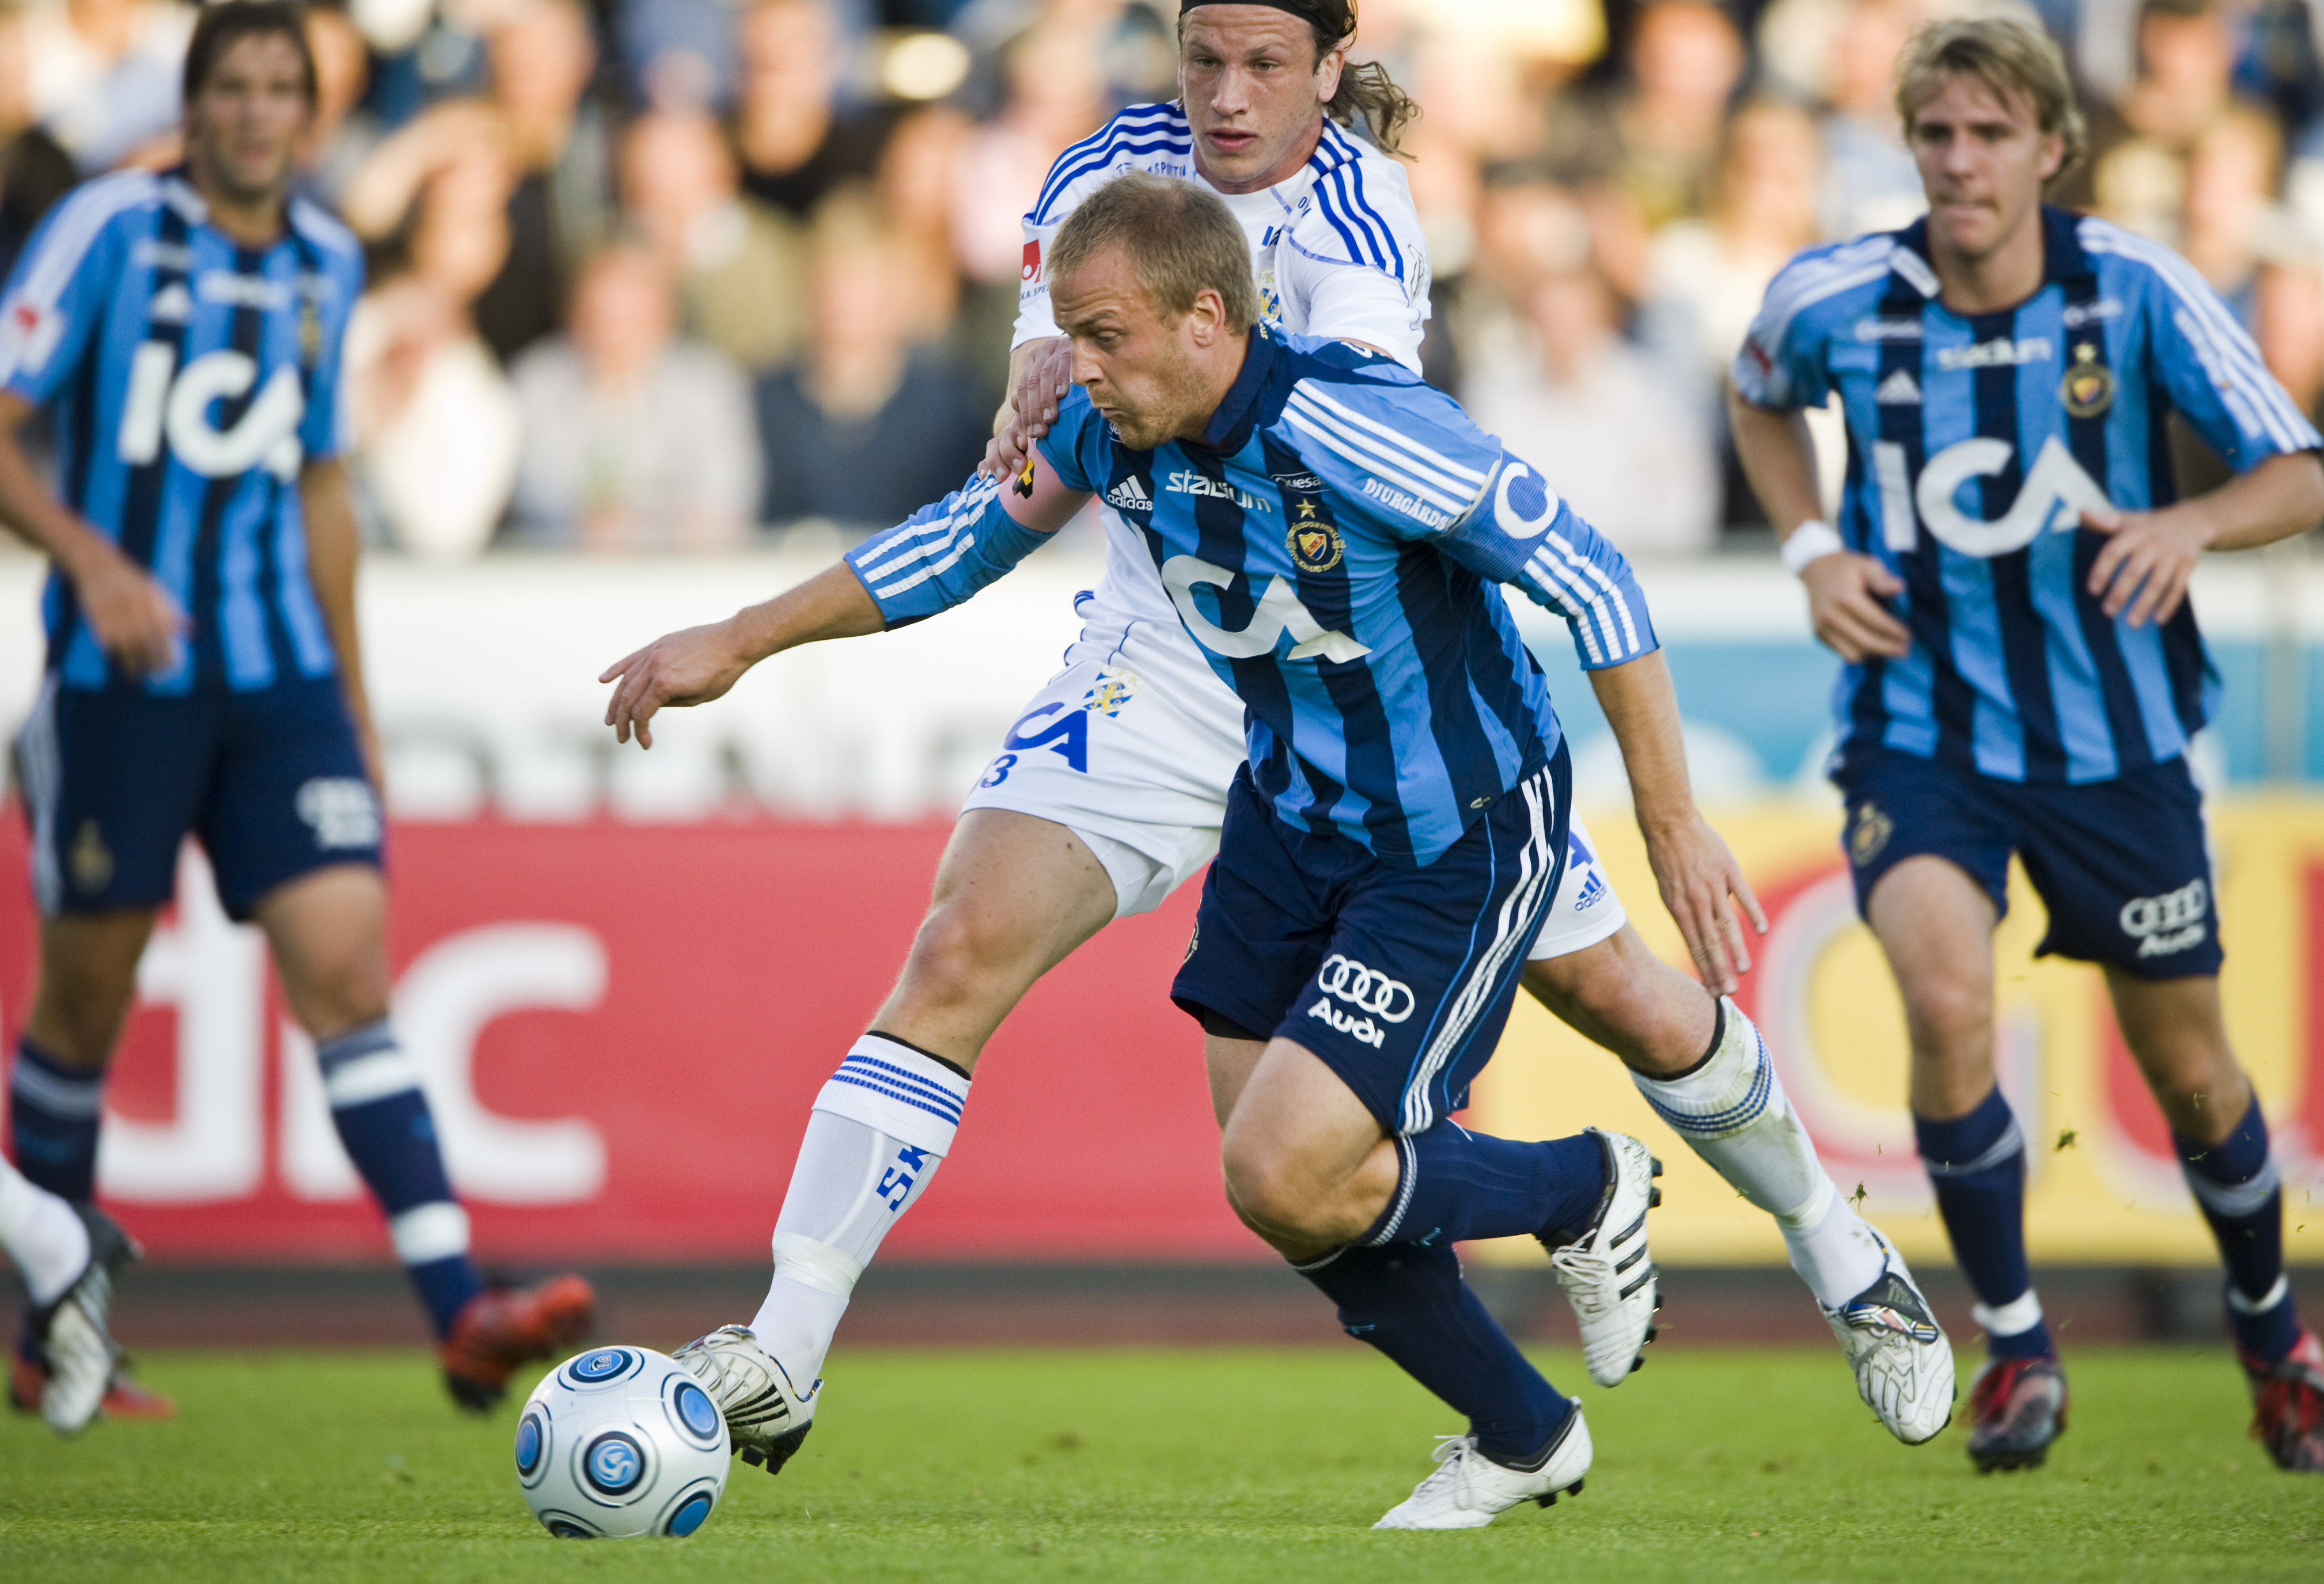 Stefan Pettersson, Dif, Allsvenskan